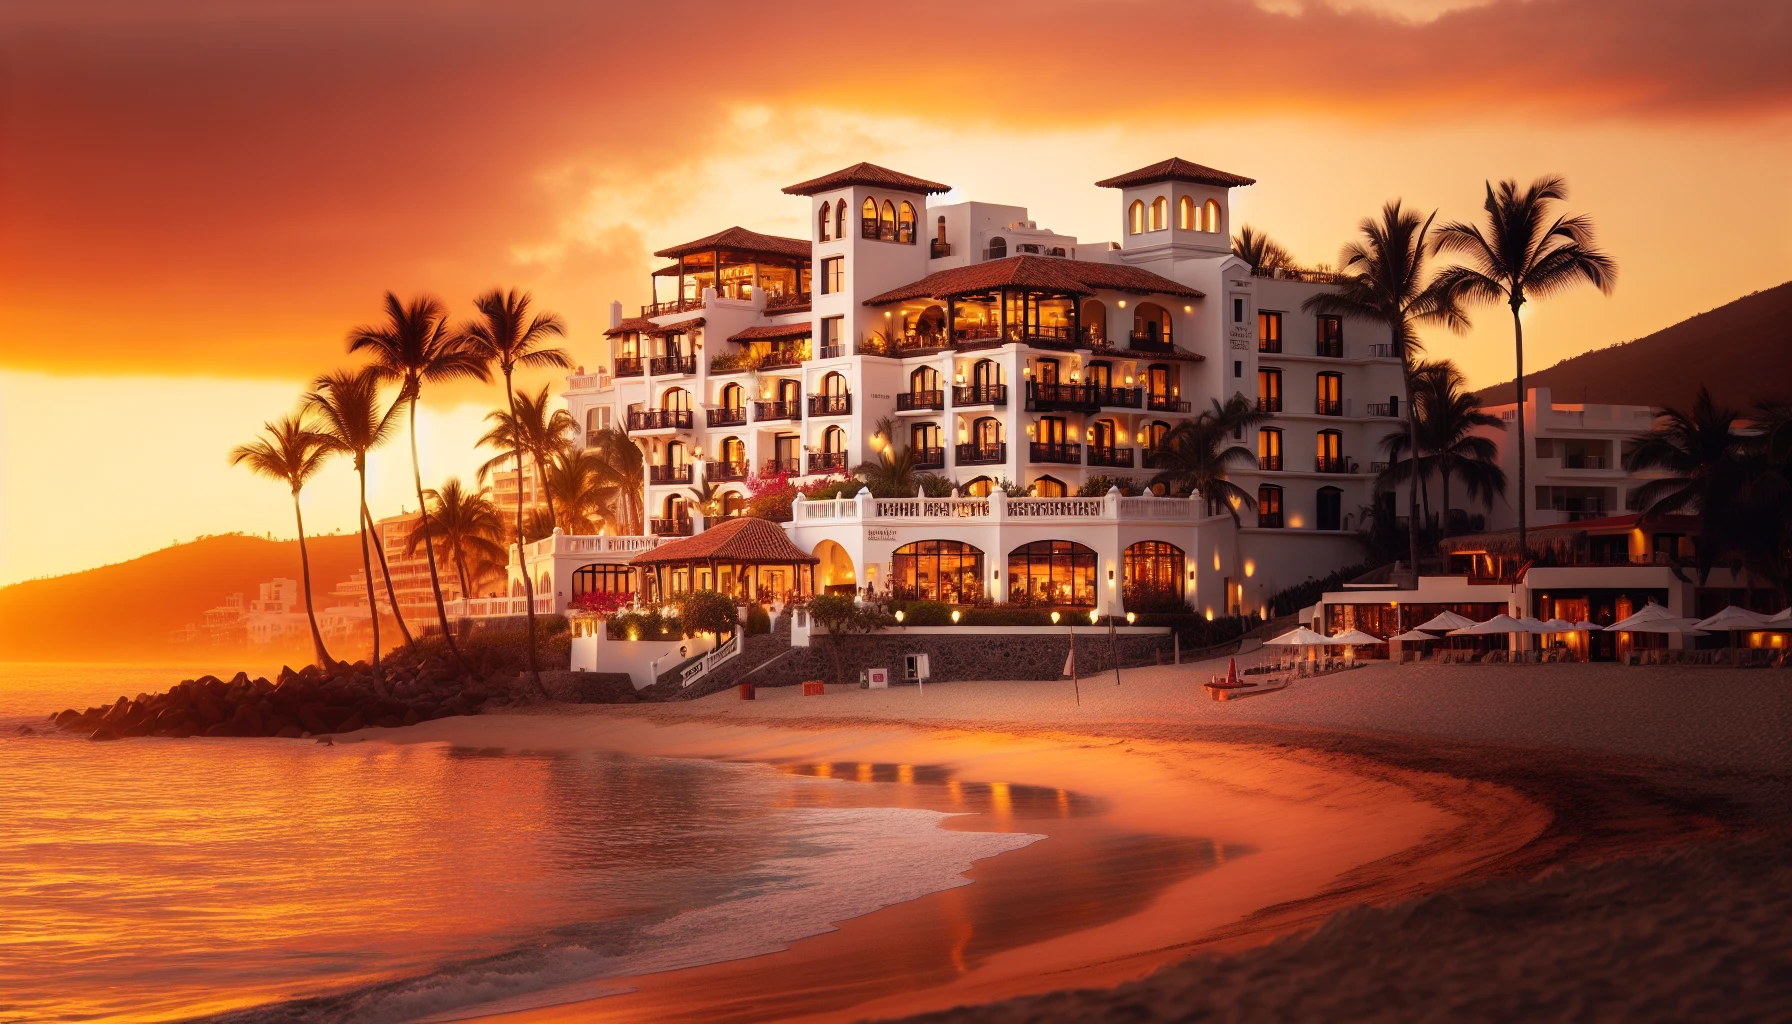 Beachfront hotel in Playa Grande at sunset